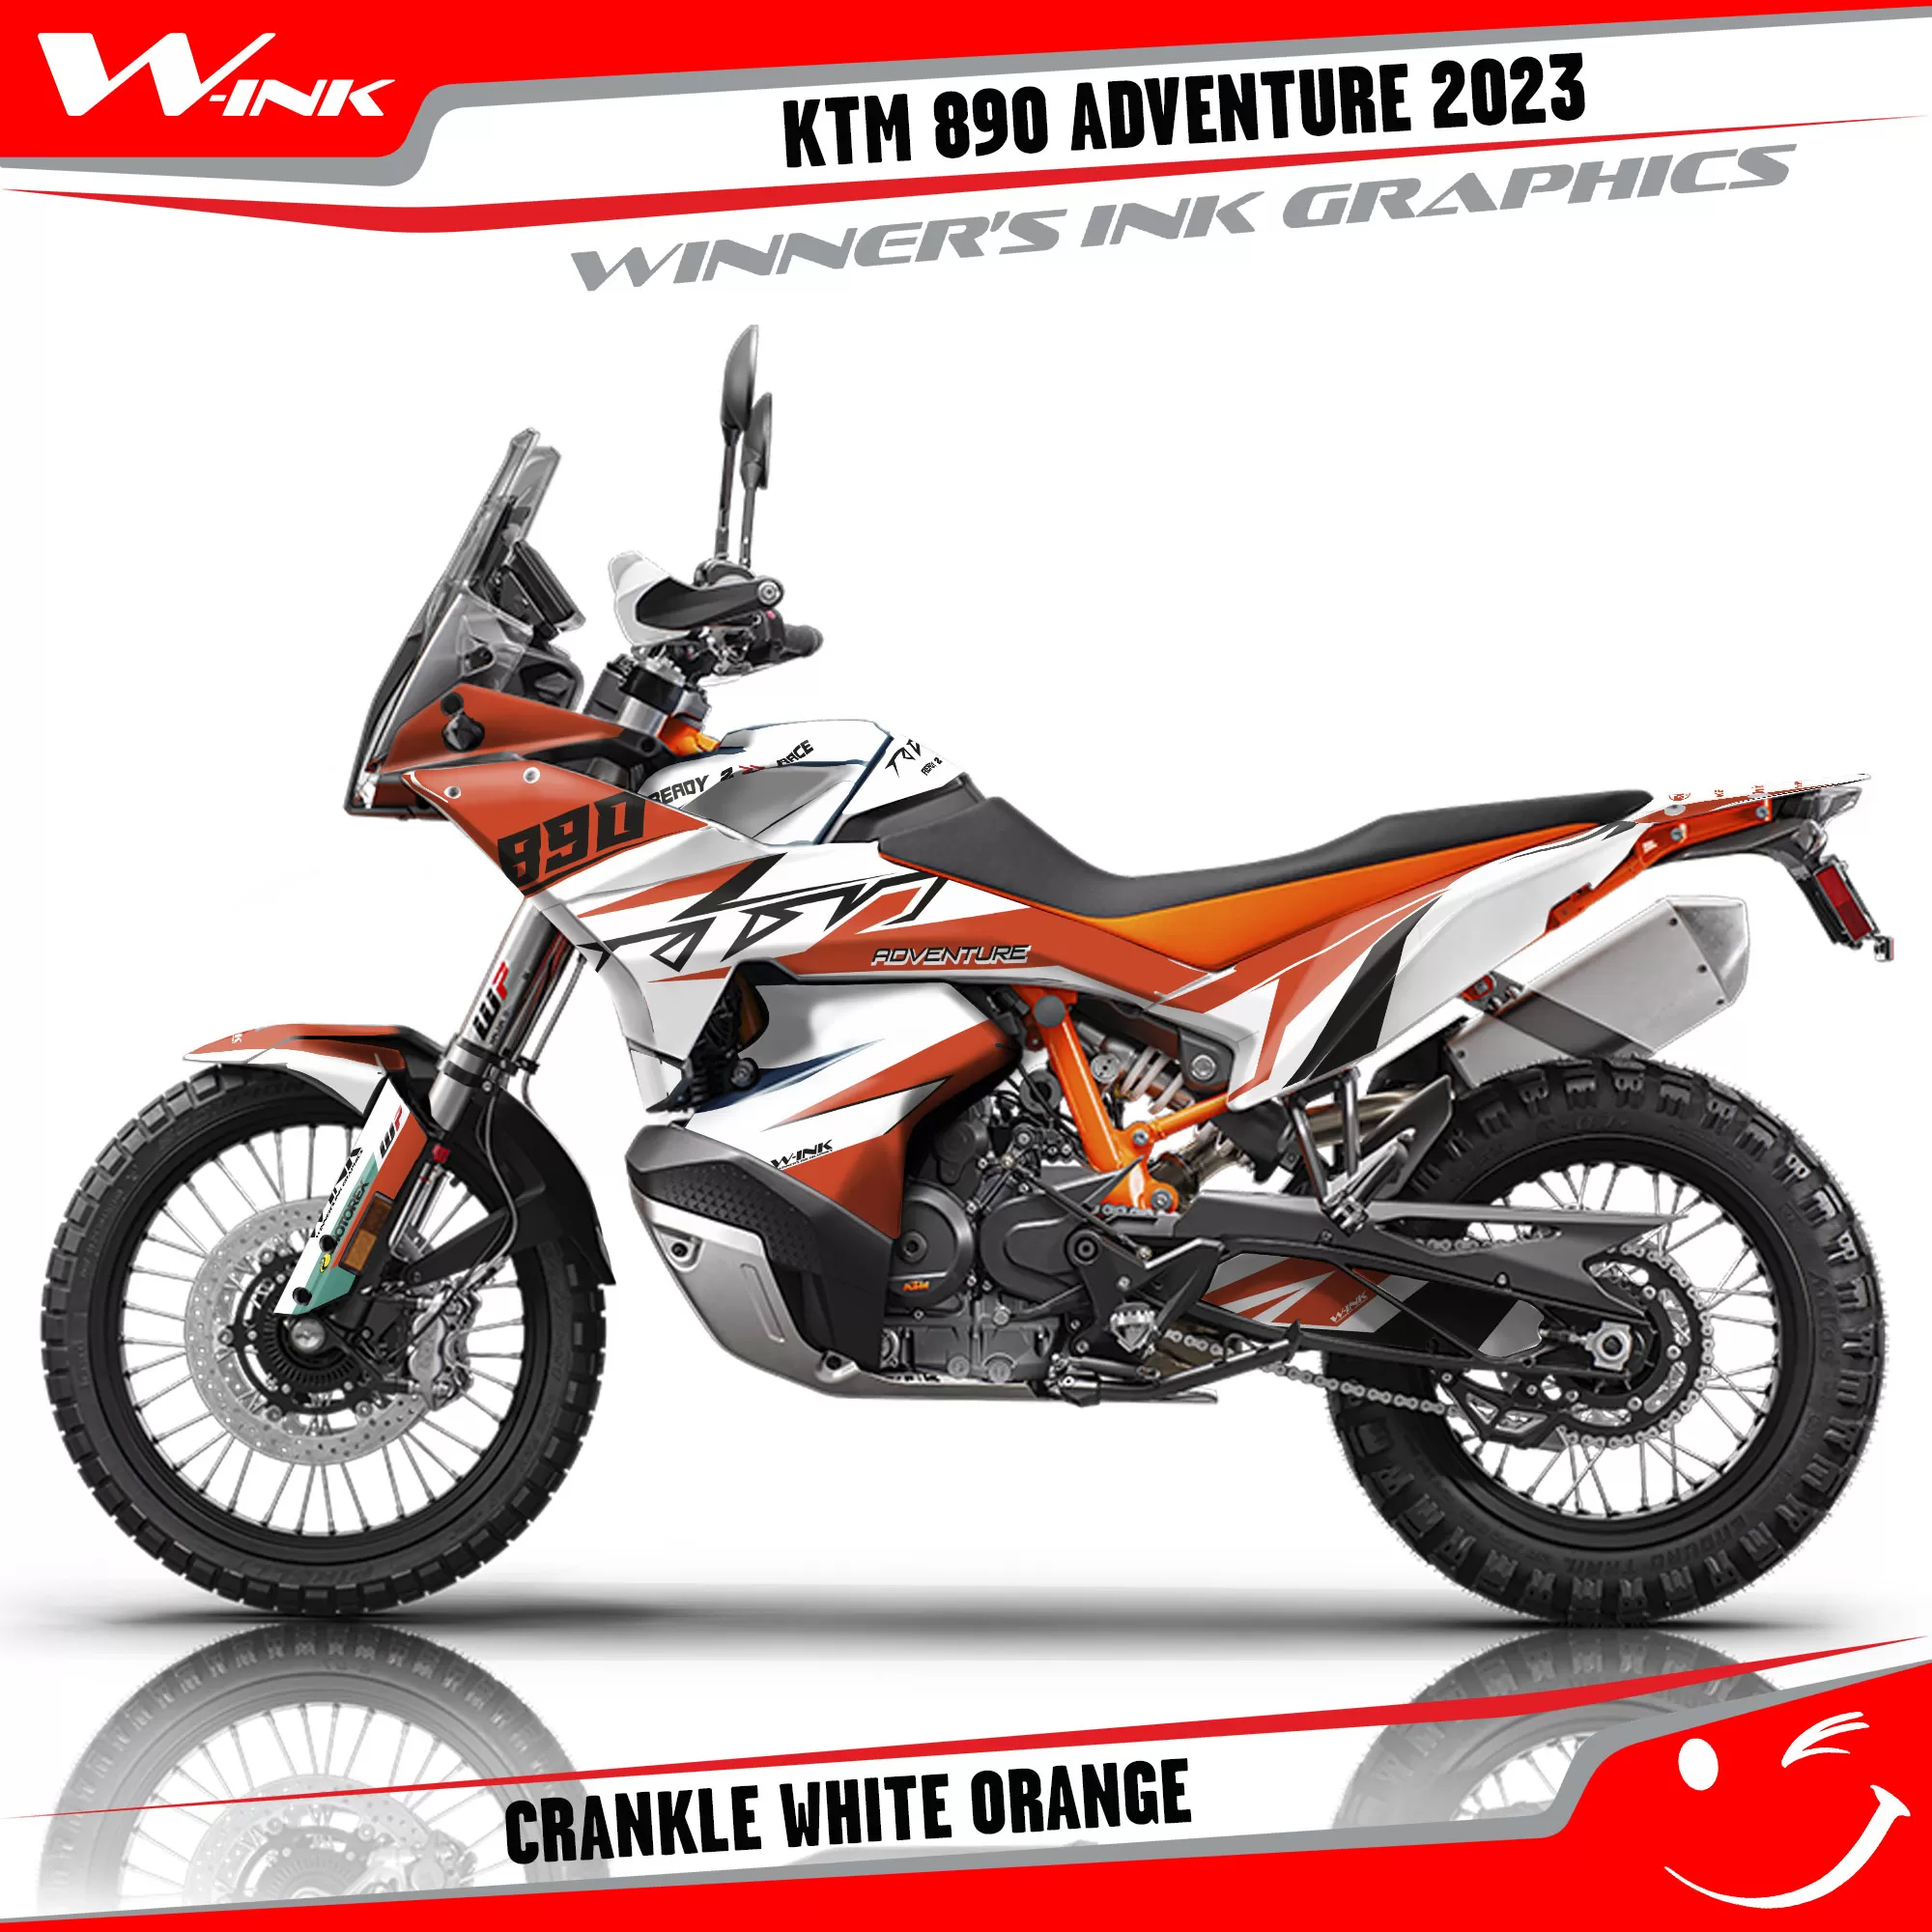 Adventure-890-2023-graphics-kit-and-decals-with-design-Crankle-White-Orange